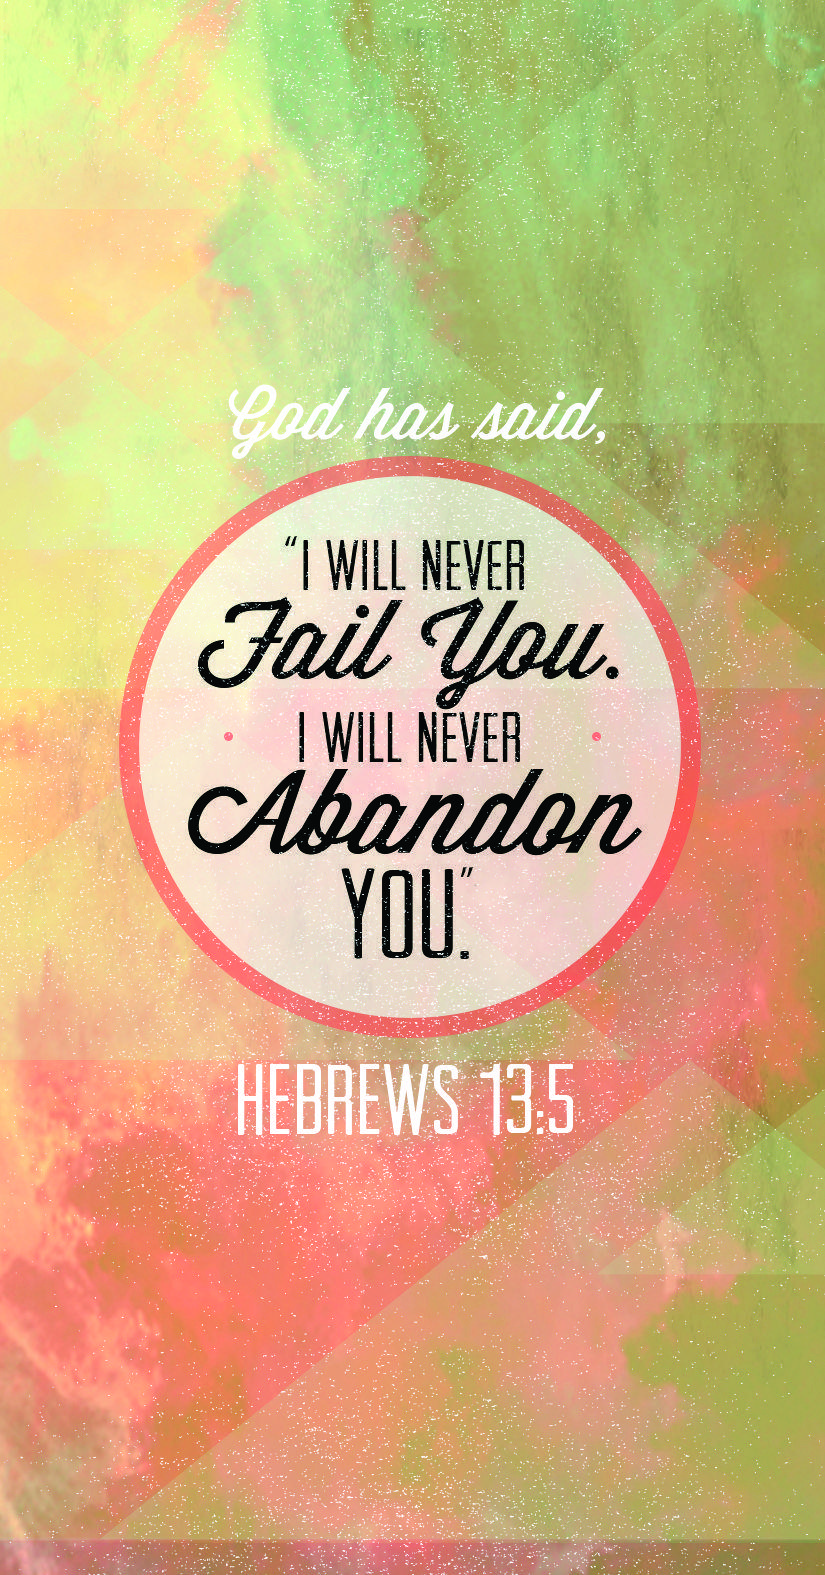 Hebrew 13:5. I will never abandon you. Original Verses